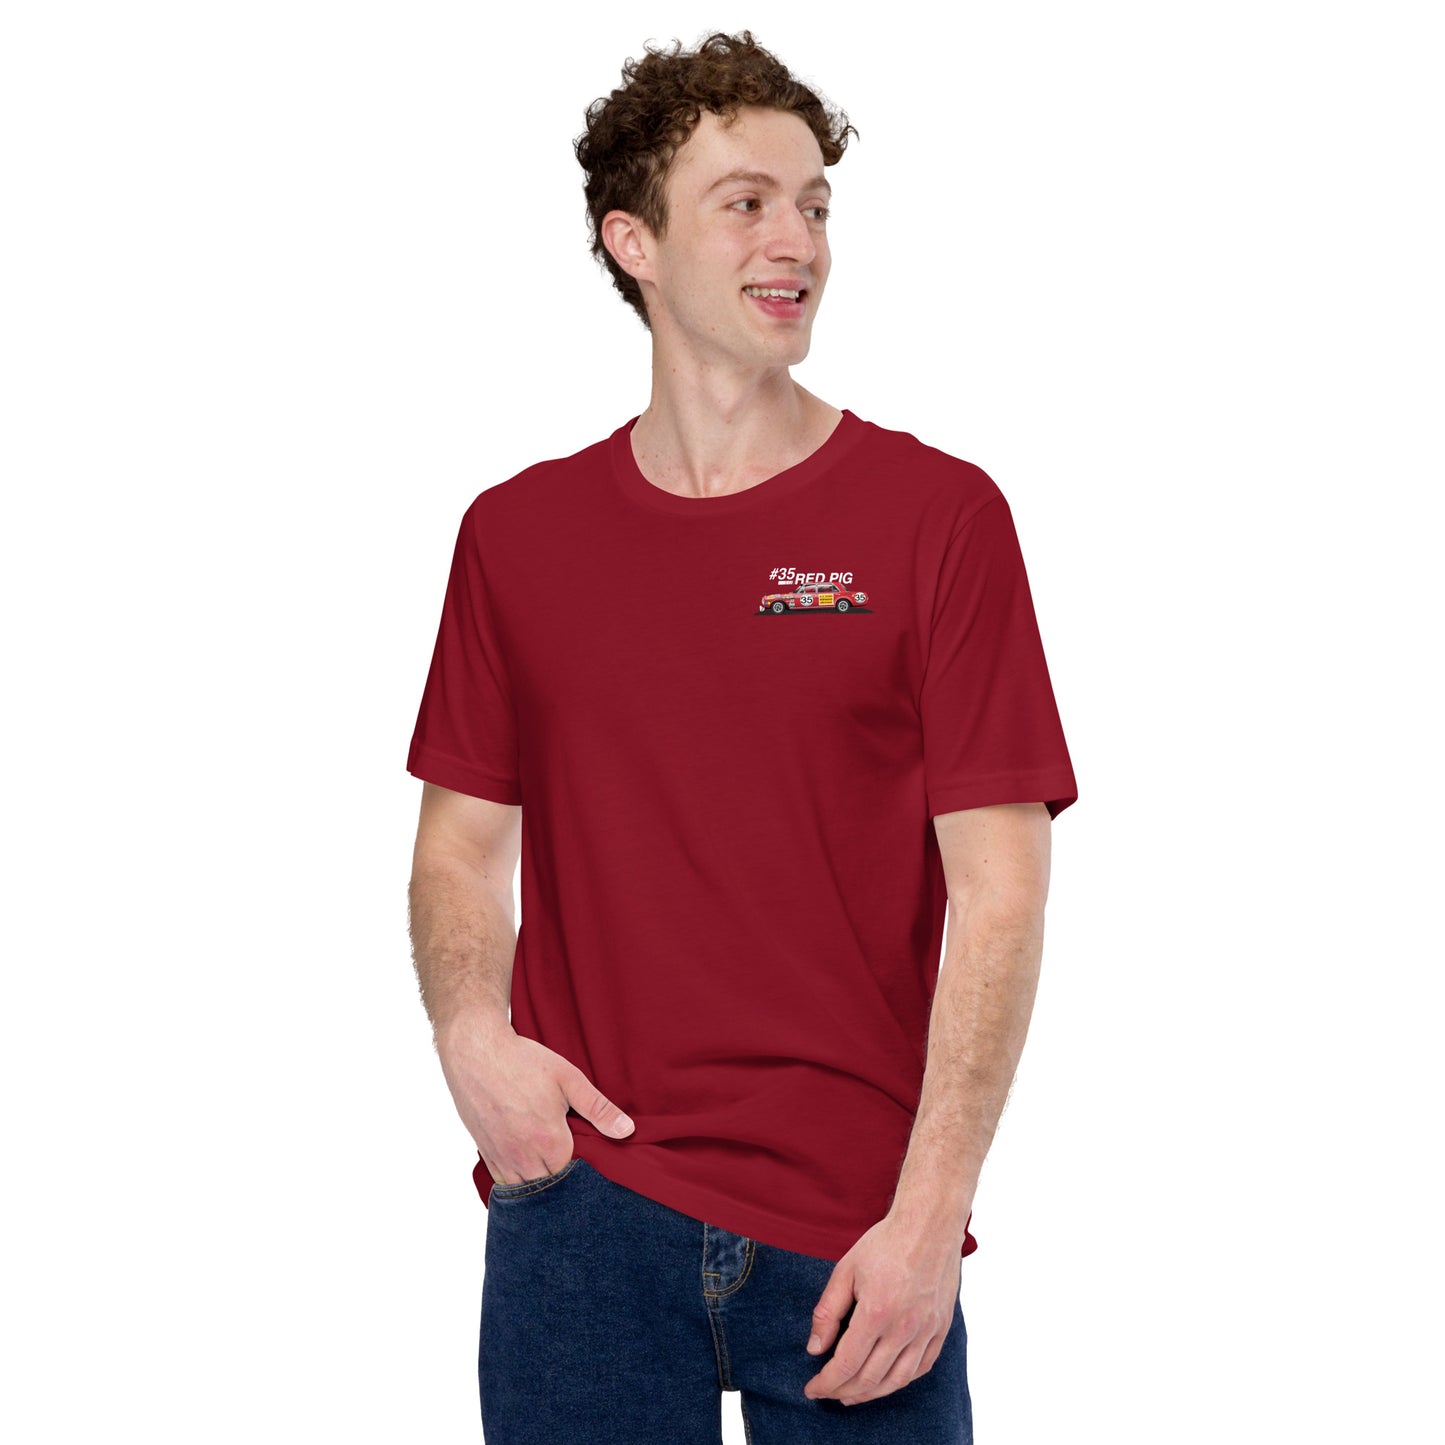 MB "Red Pig" Unisex T-Shirt